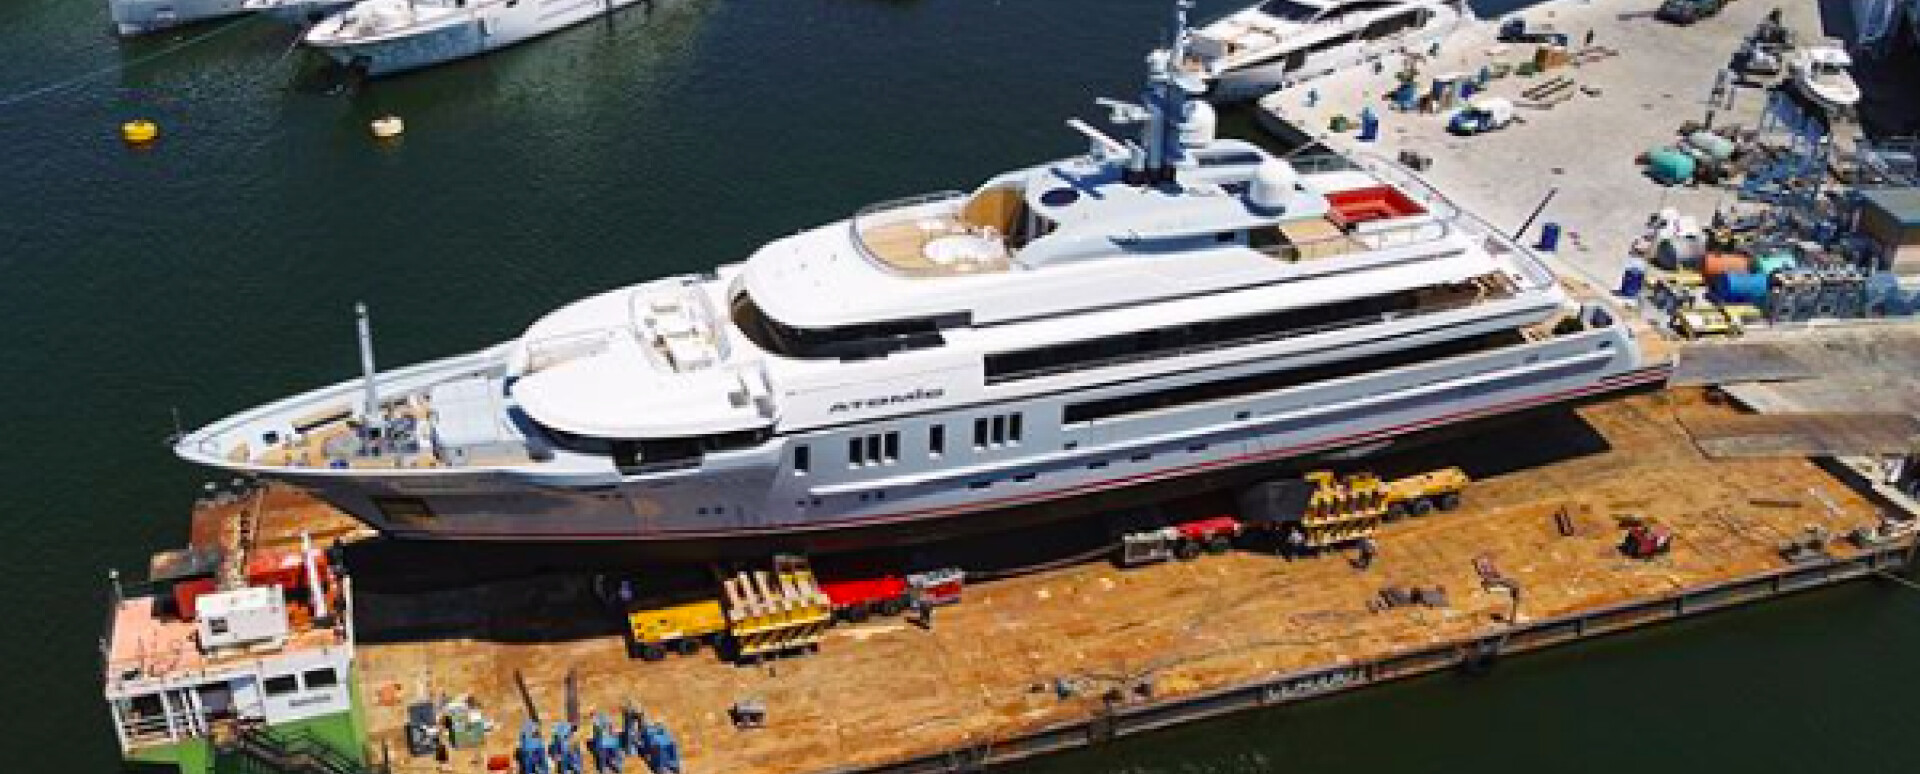                                                                                                     Viareggio Super Yachts launch 64-metre M/Y Atomic
                                                                                            